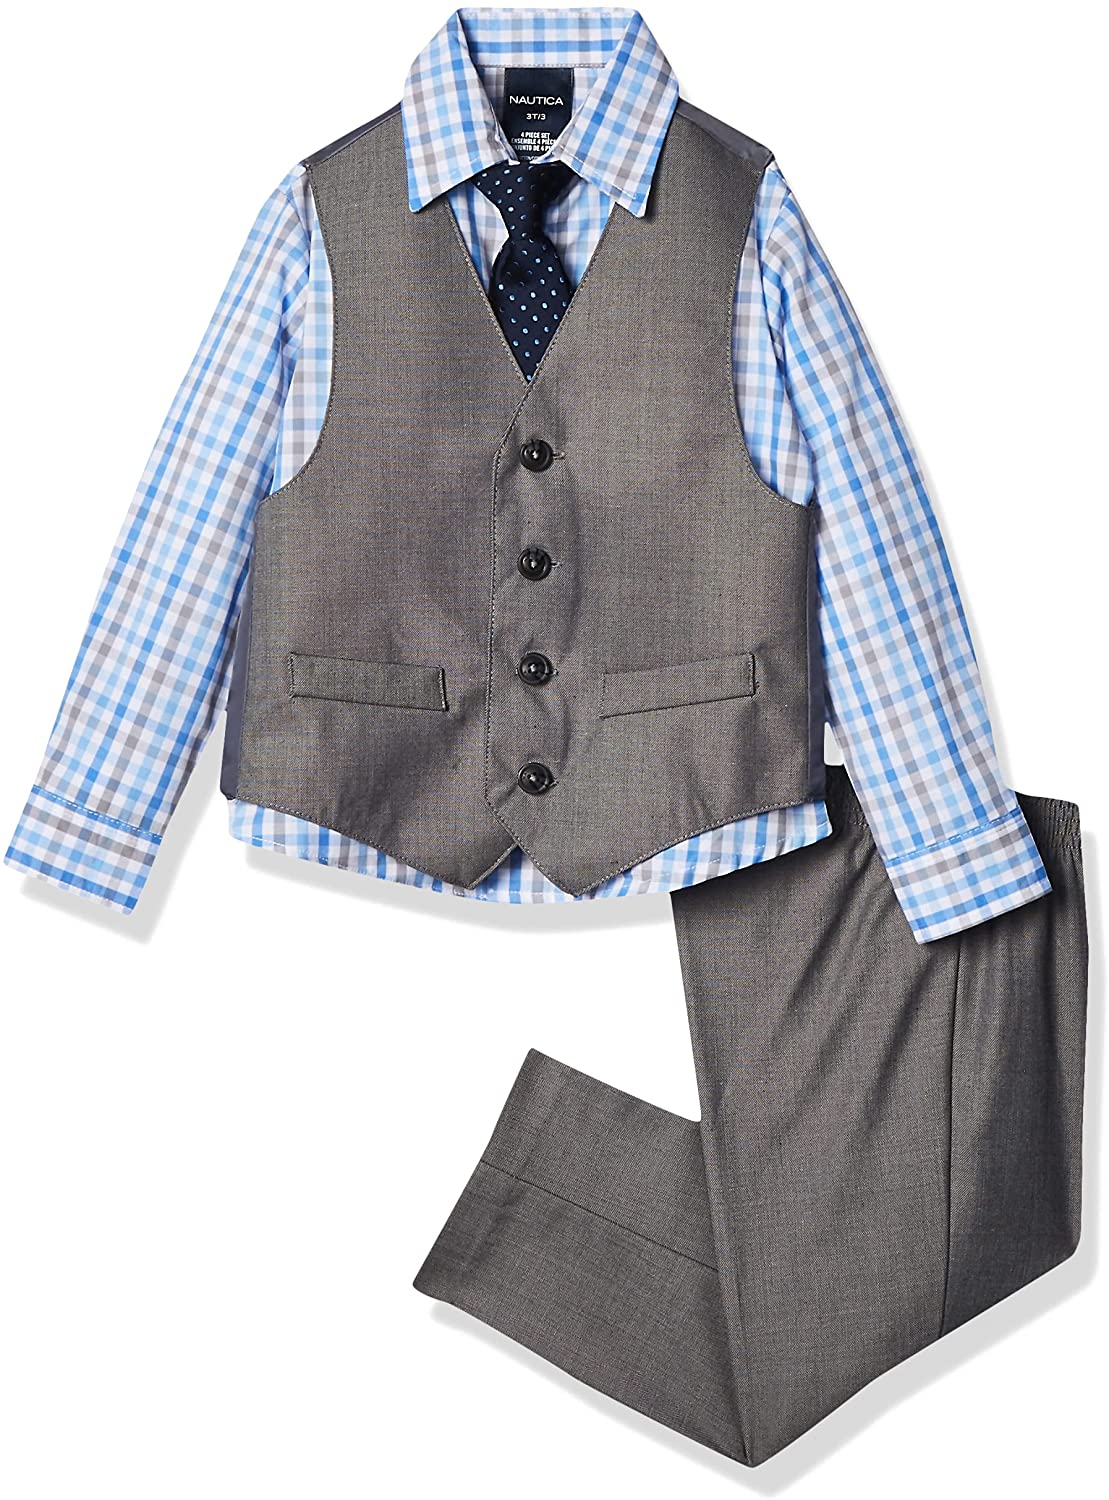 Details about   S.H Churchill & Co Boy's 4 Piece Vest Set Neck Tie & Pocket Han with Bow Tie 